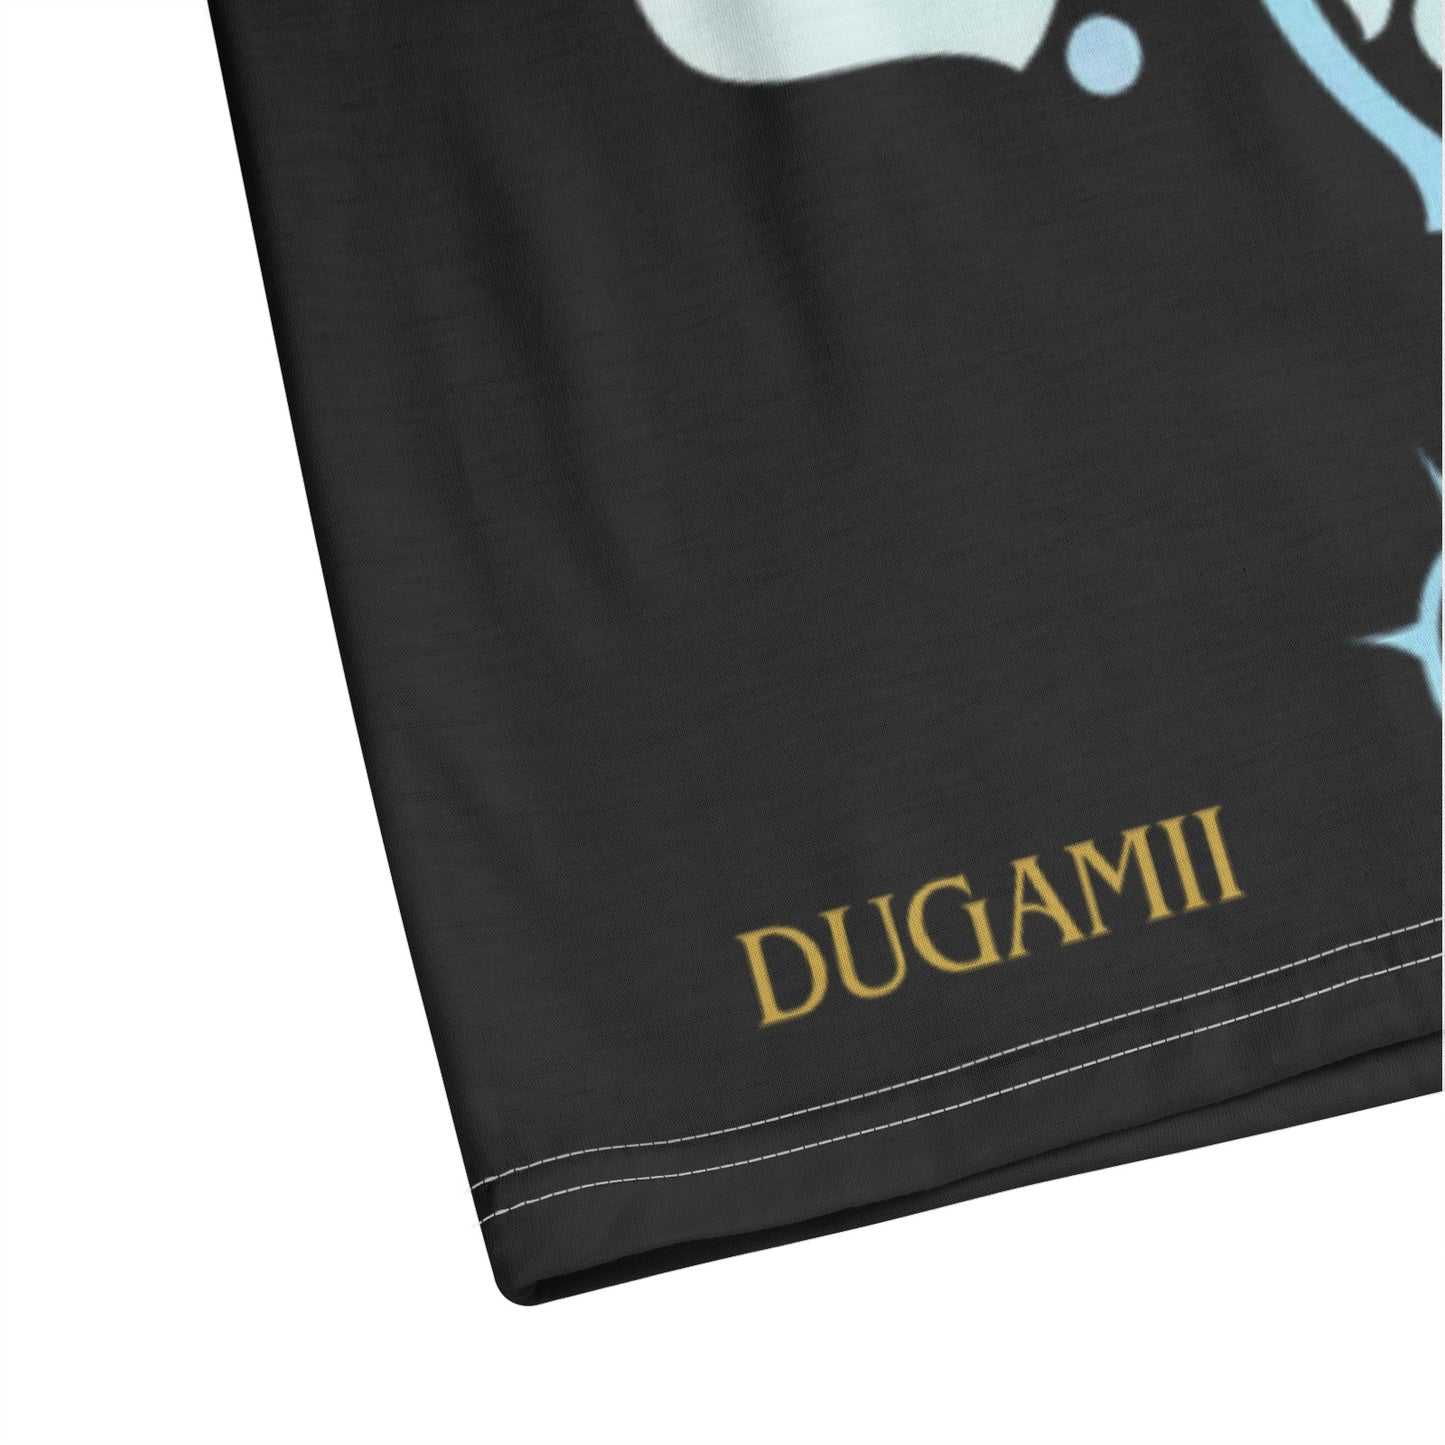 Men's DuGamii Lock and Key Black Shirt With White Sleeves